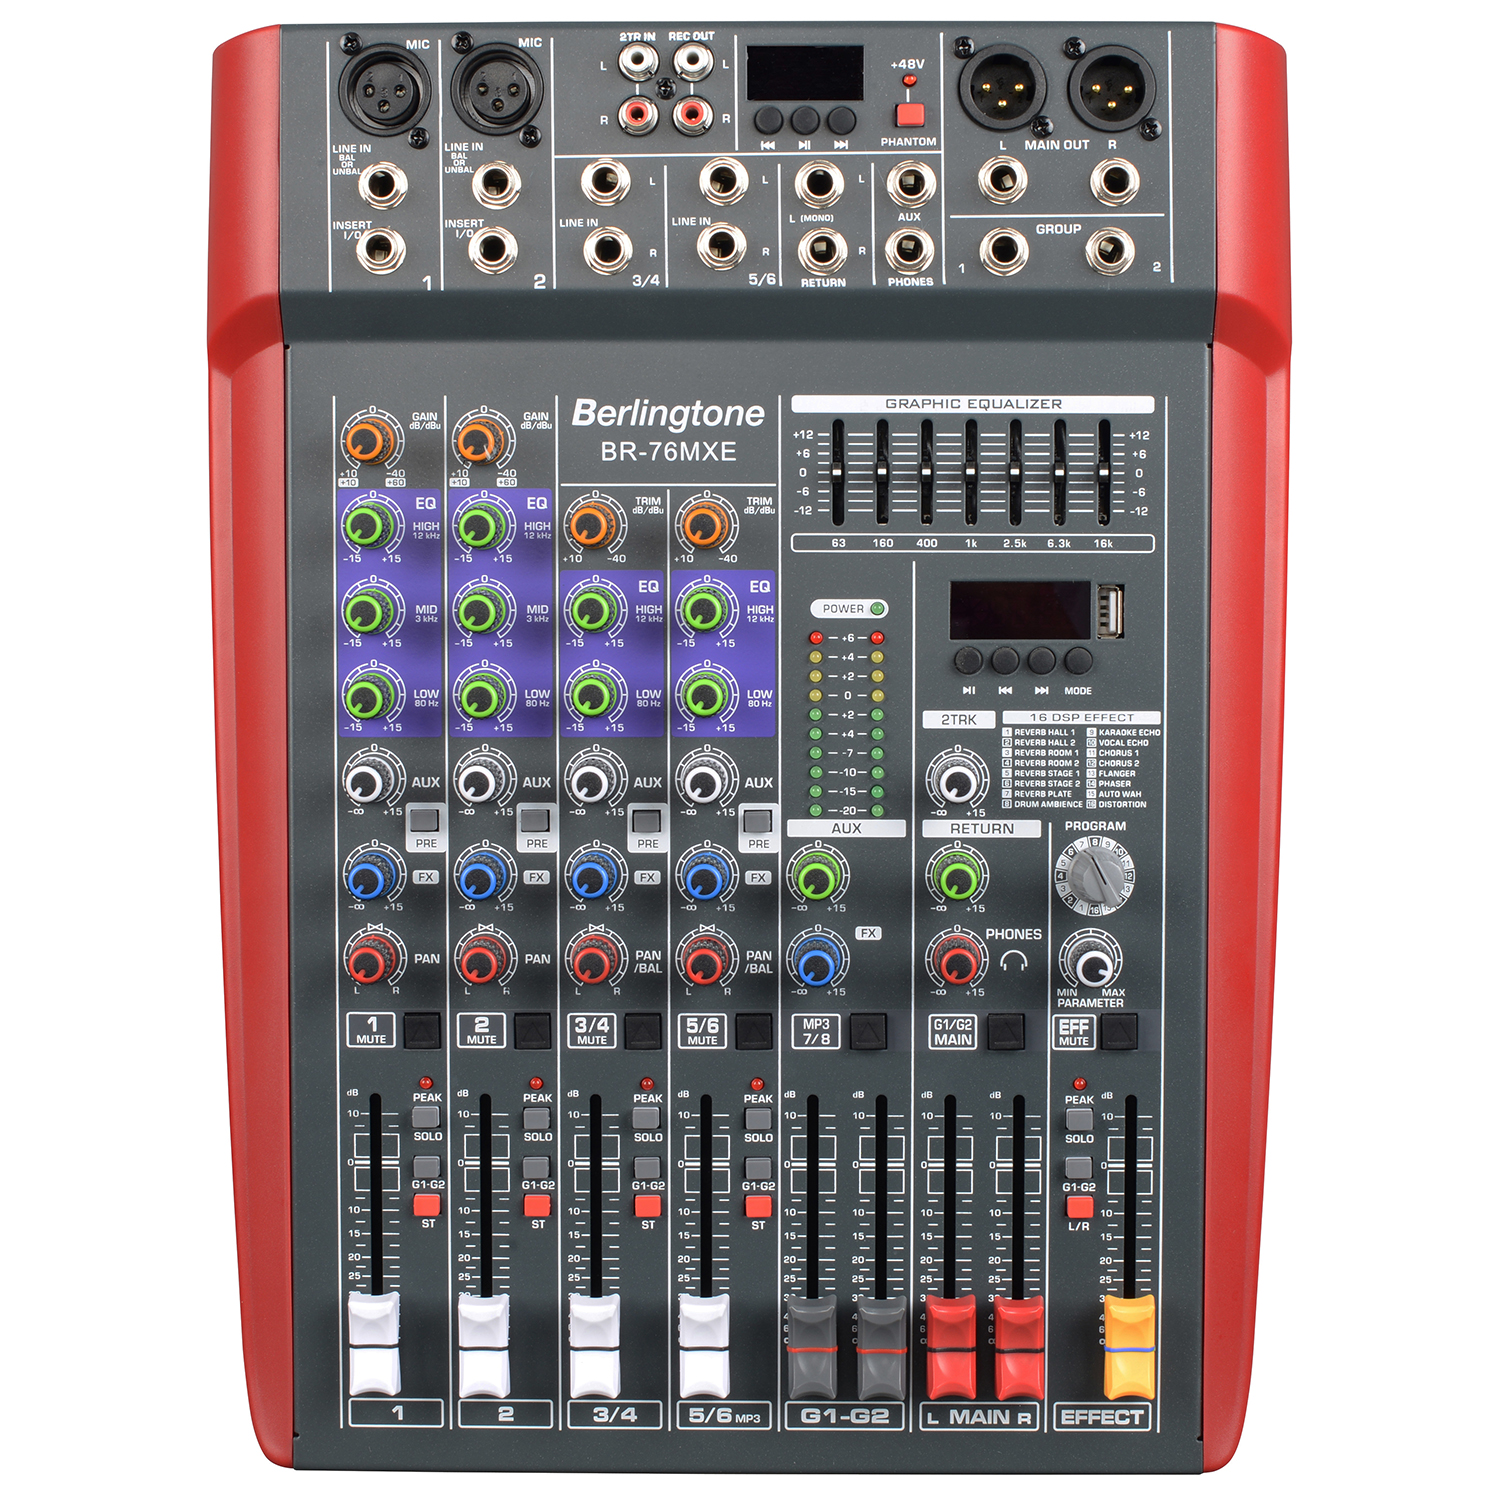 Channel　Drive,　Sound　USB　BR-76MX,　Studio　Berlingtone　Berlingtone　DJ　Mixer　Controller,　Bluetooth　Recording　Audio　PC